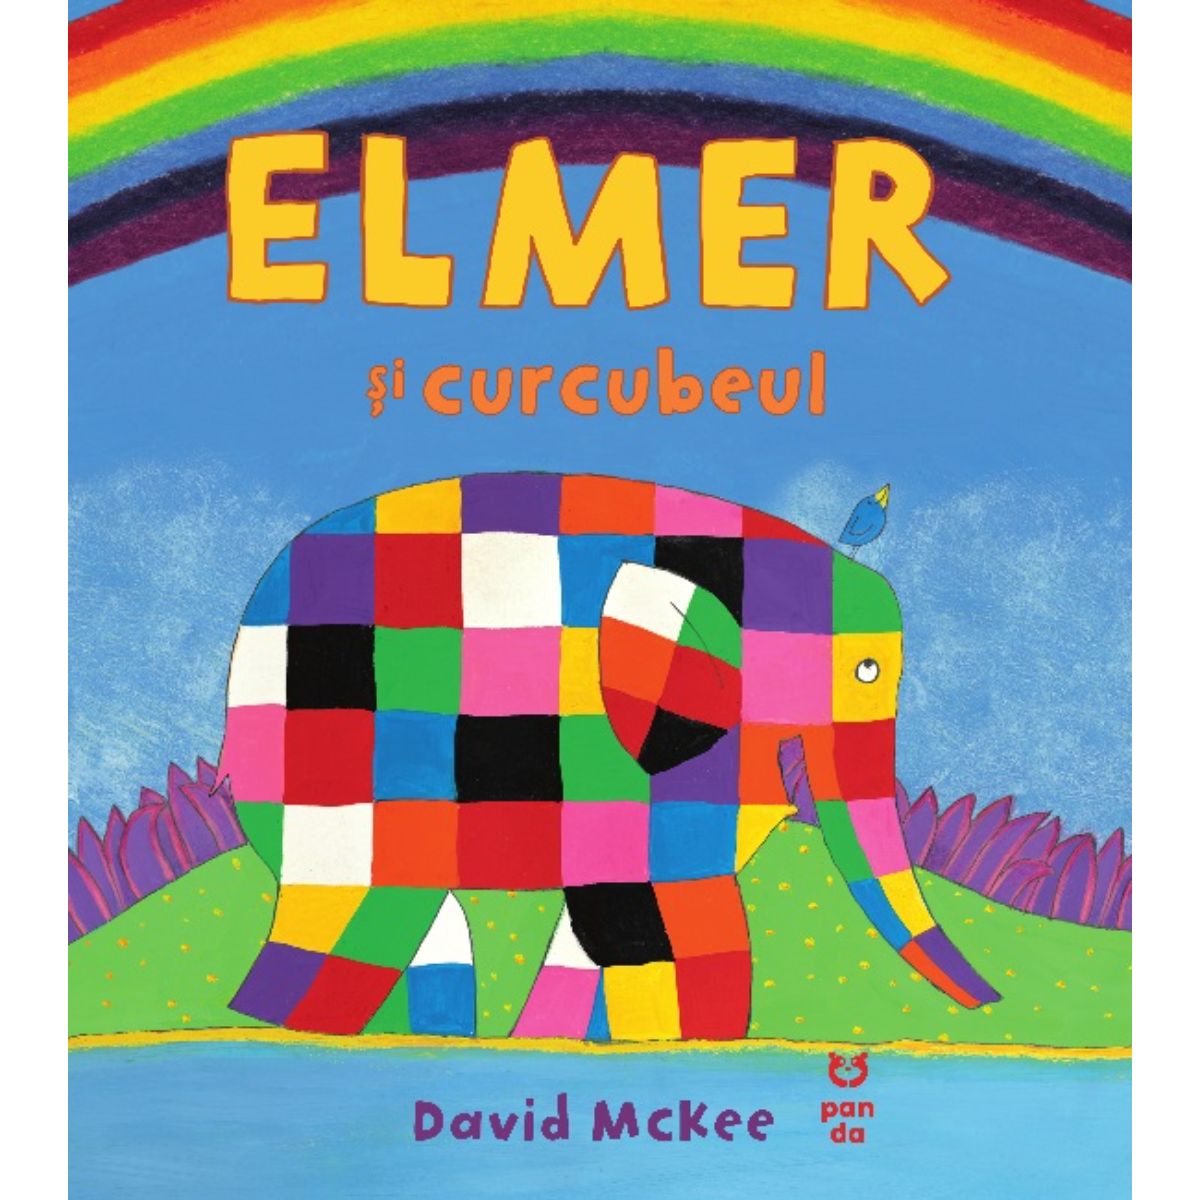 Elmer si curcubeul, David Mckee noriel.ro